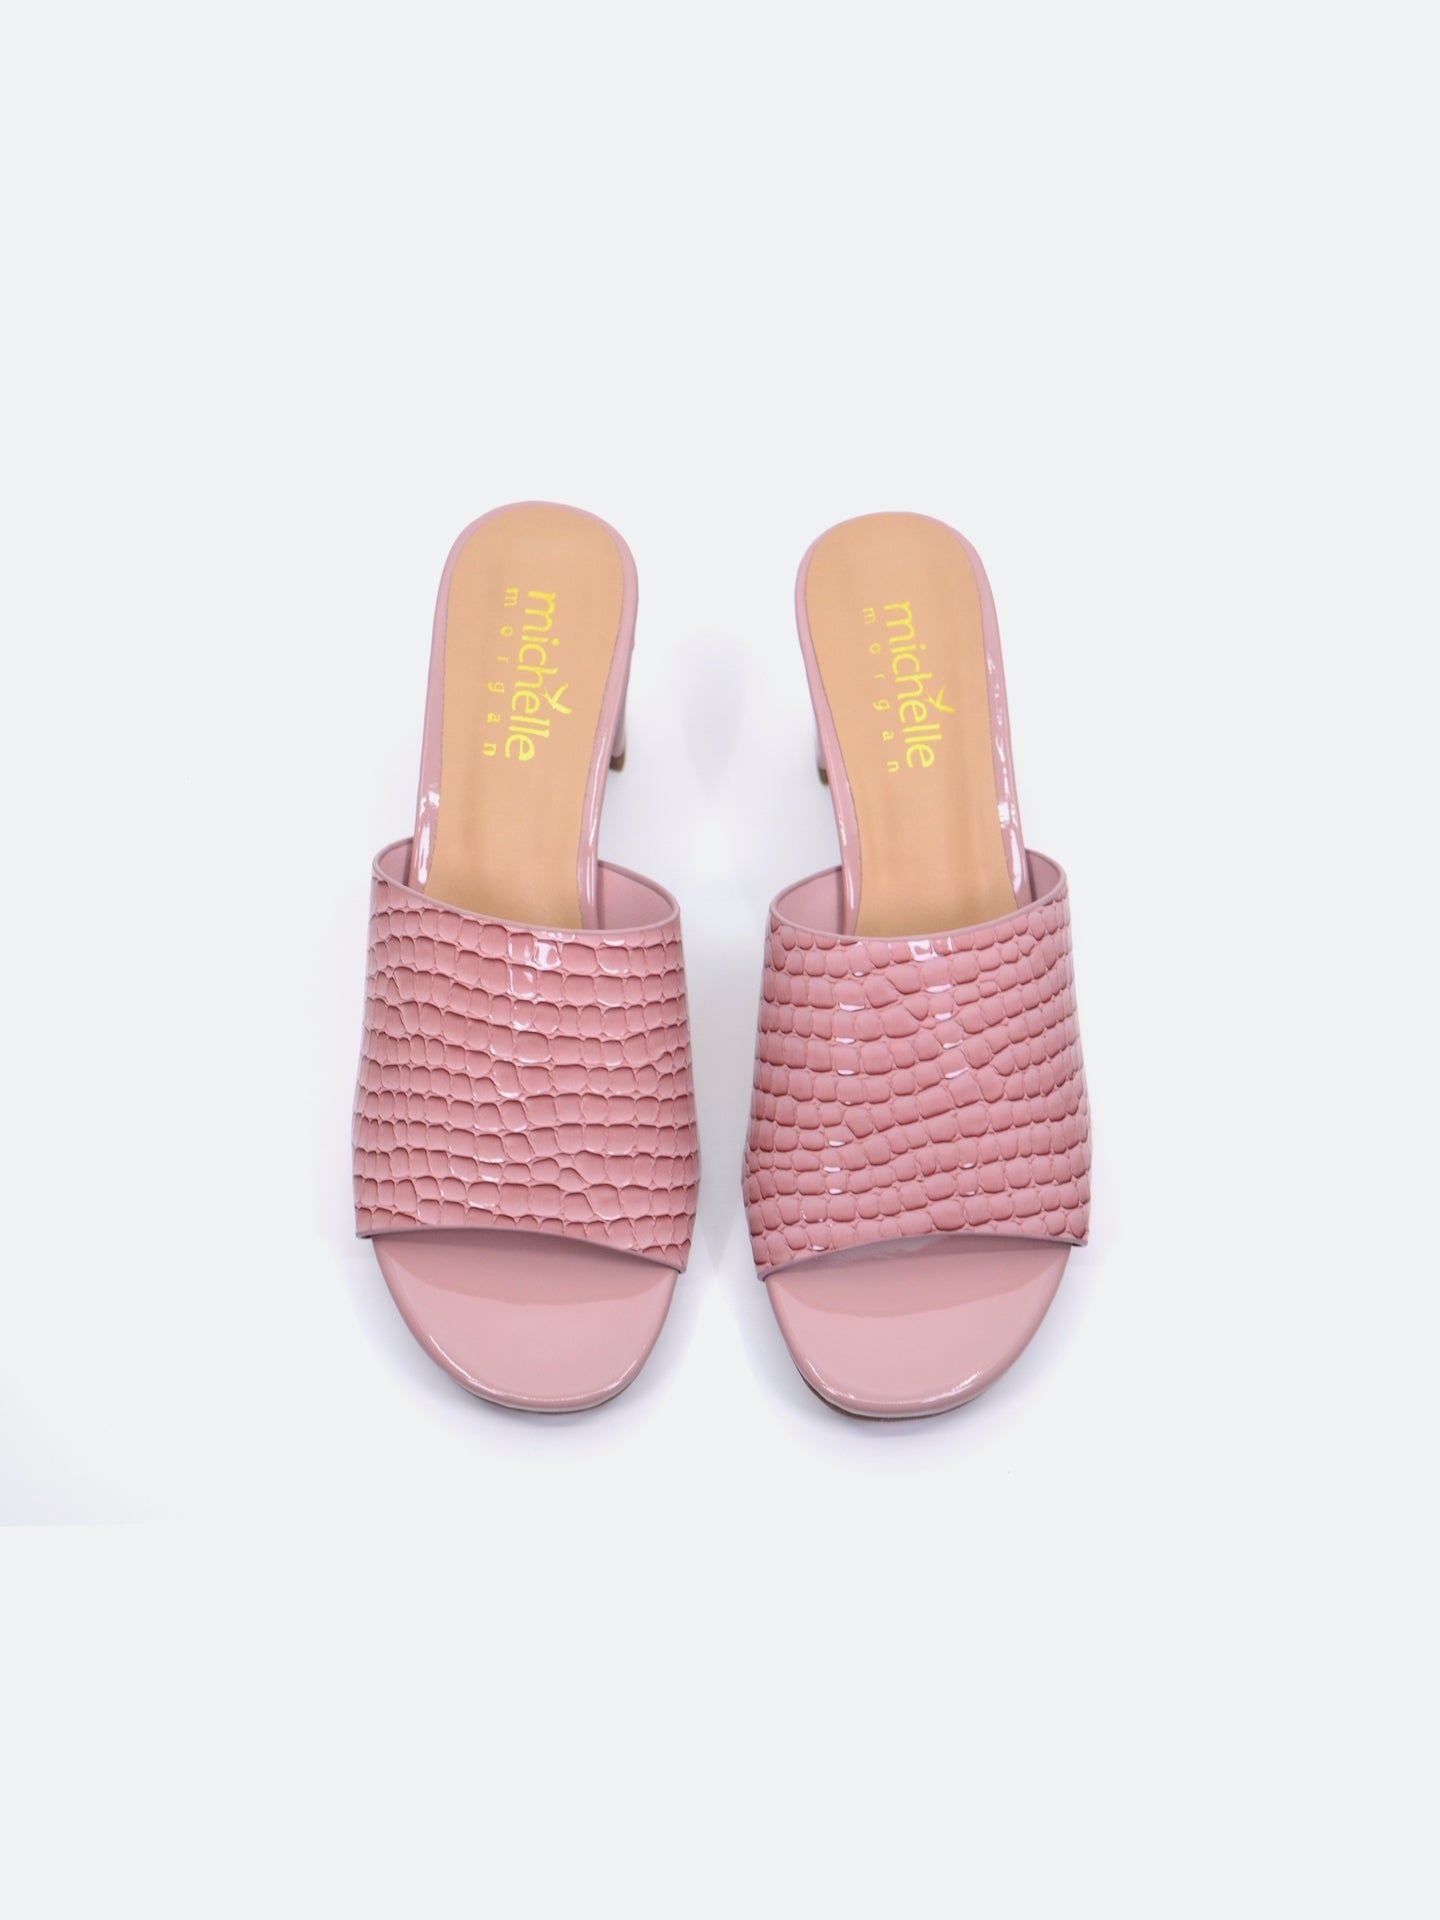 Michelle Morgan 914RJ191 Women's Heeled Sandals #color_Pink